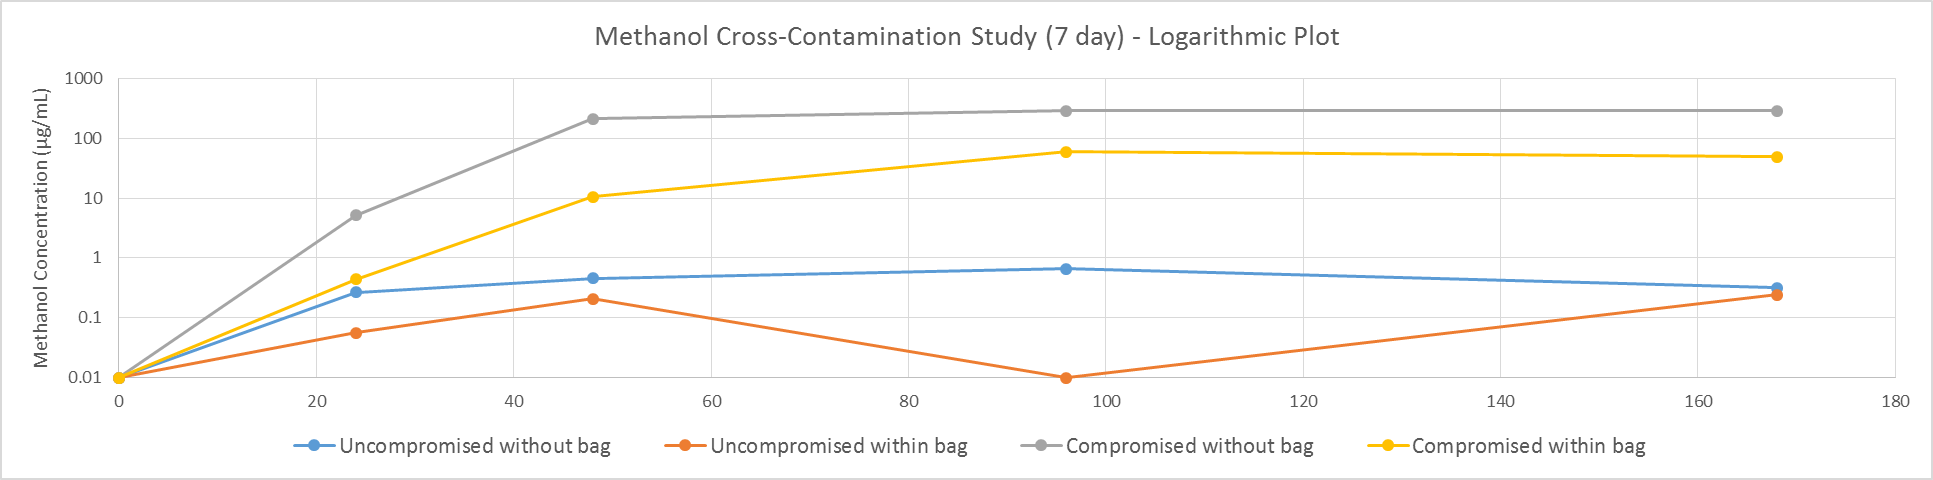 Logarithmic Plot of Methanol Cross-Contamination Data Set